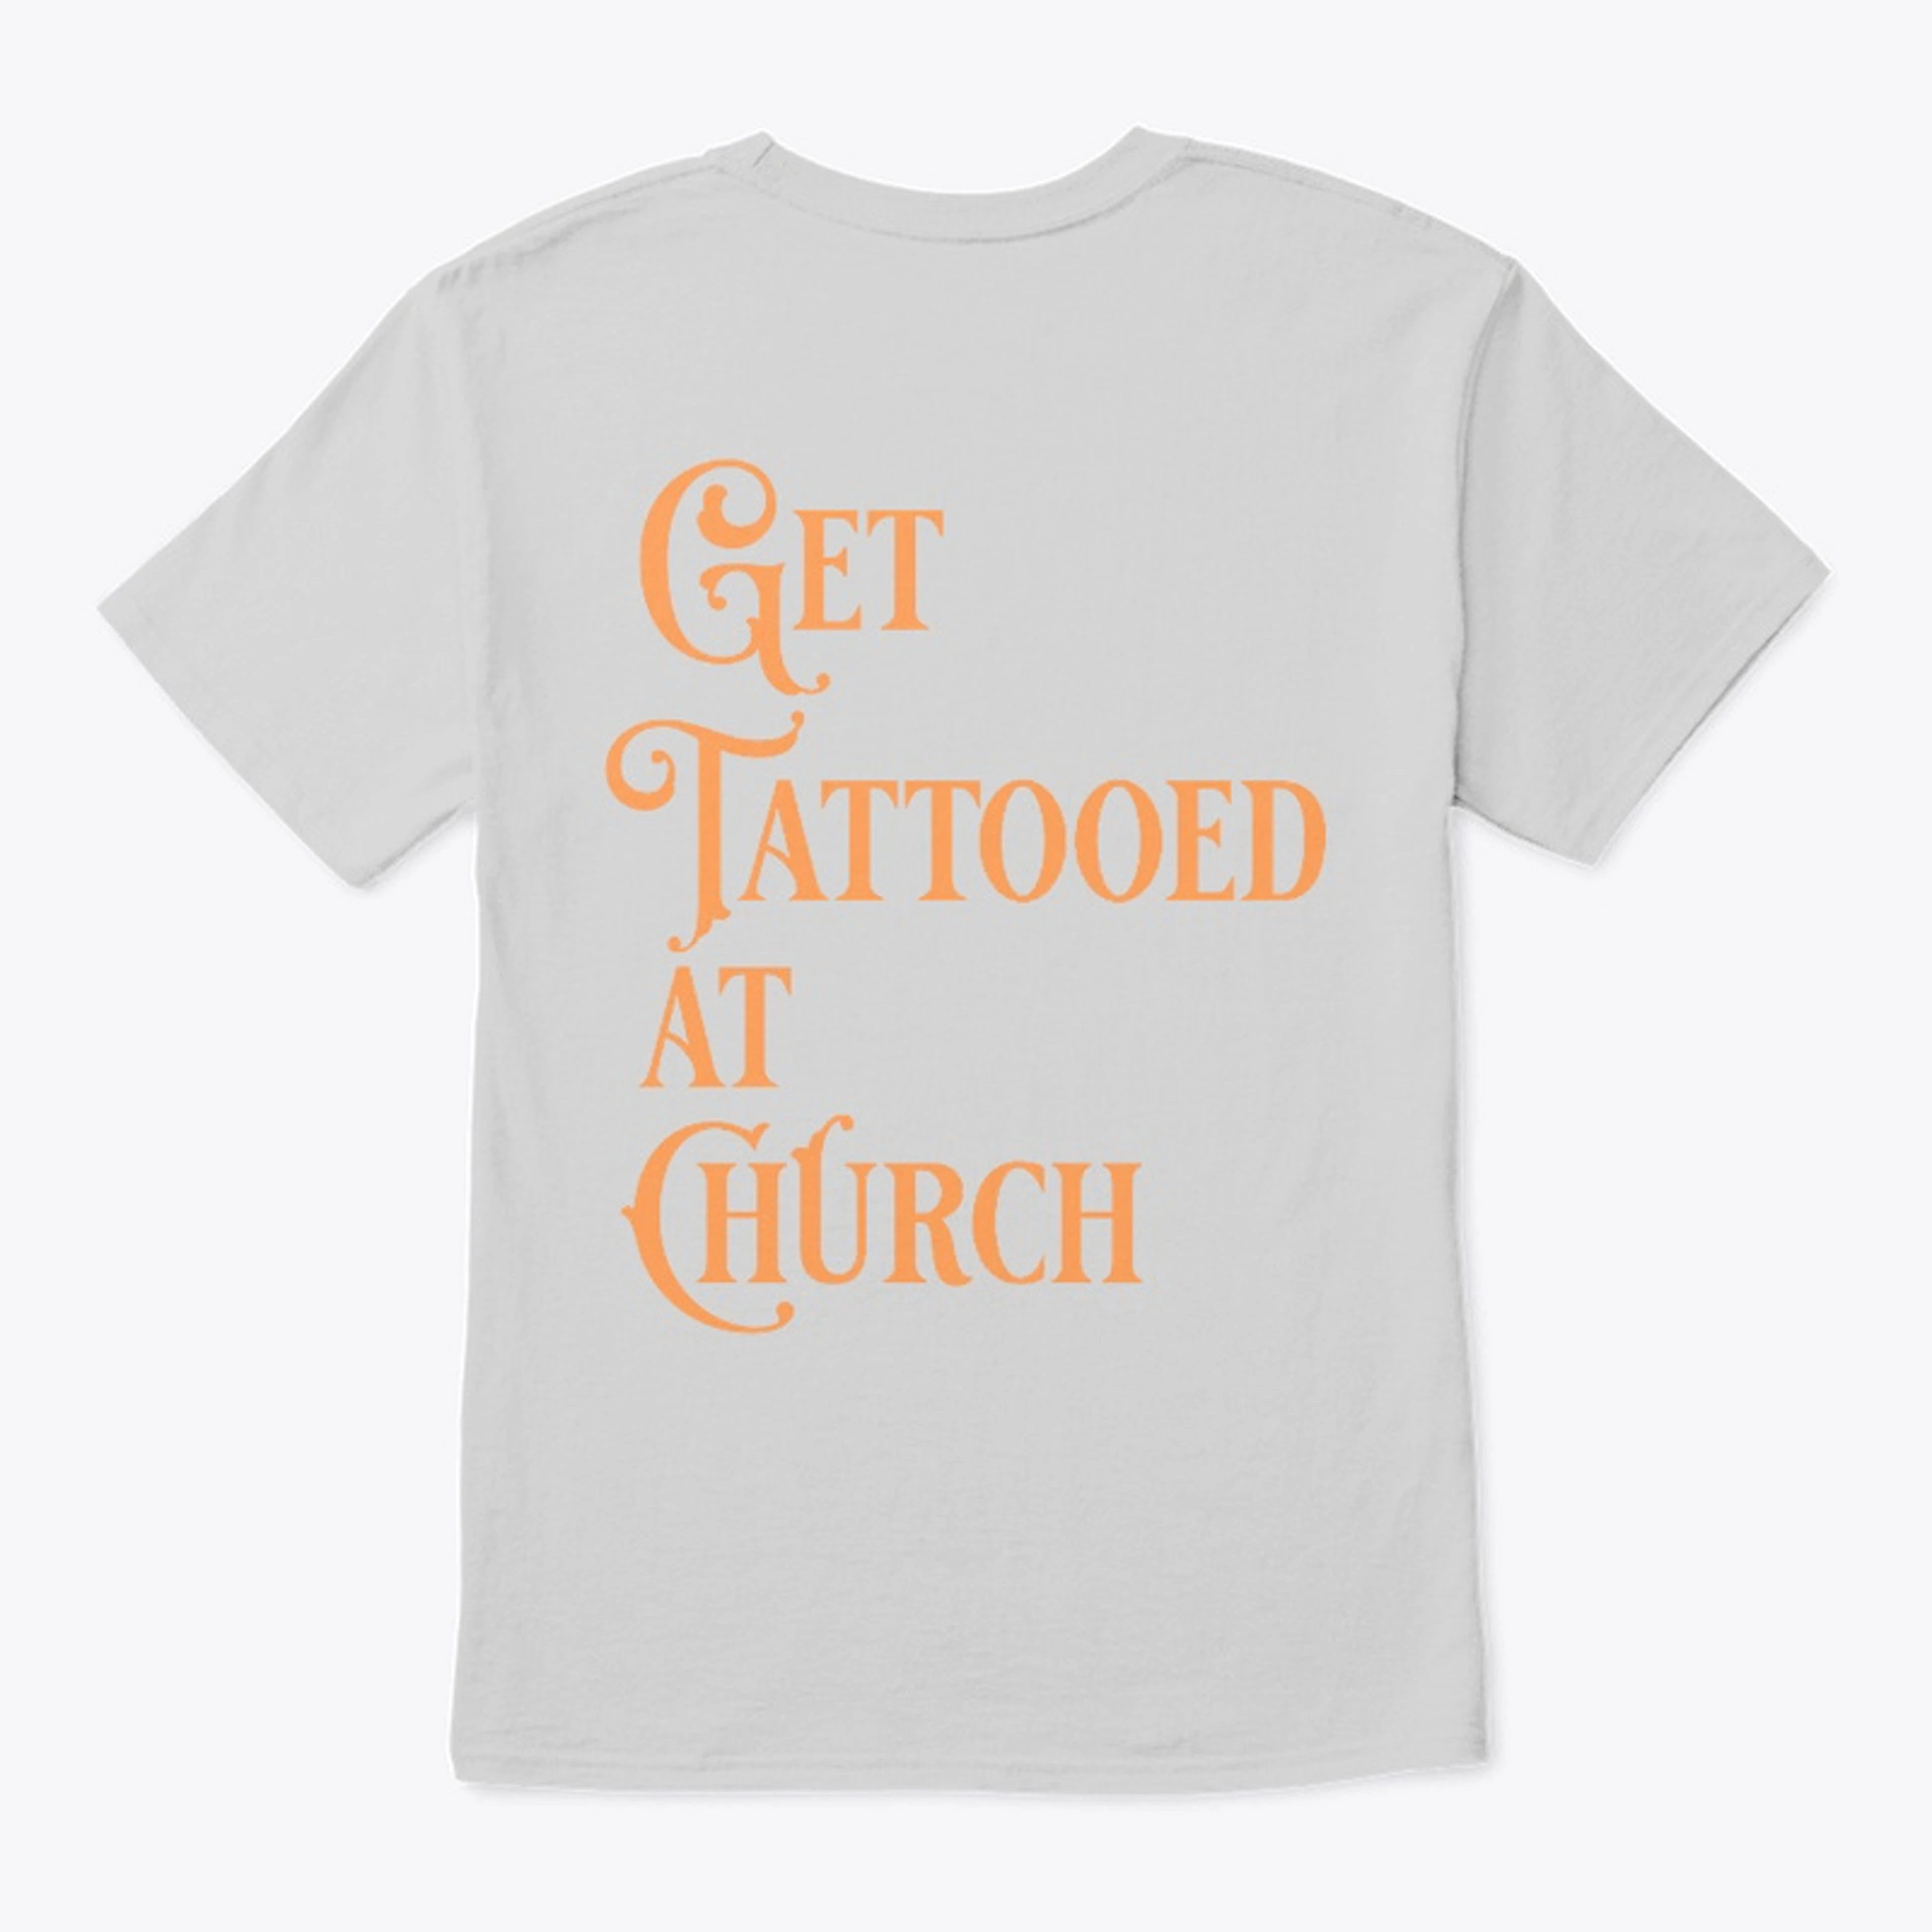 Get Tattooed at Church Tee